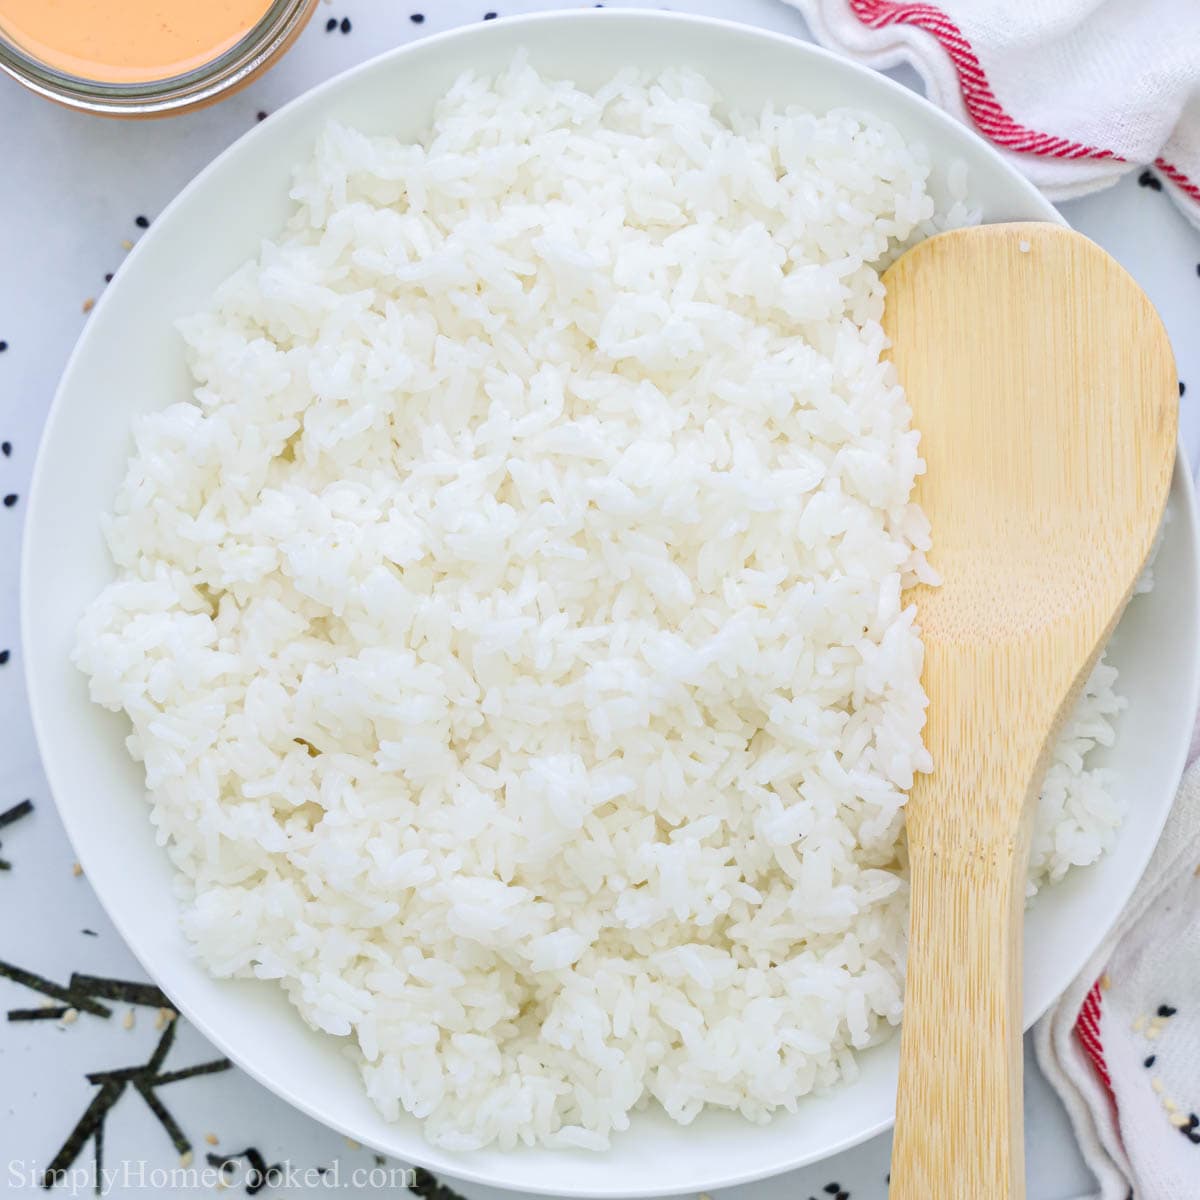 https://simplyhomecooked.com/wp-content/uploads/2022/06/sushi-rice-recipe-2.jpg